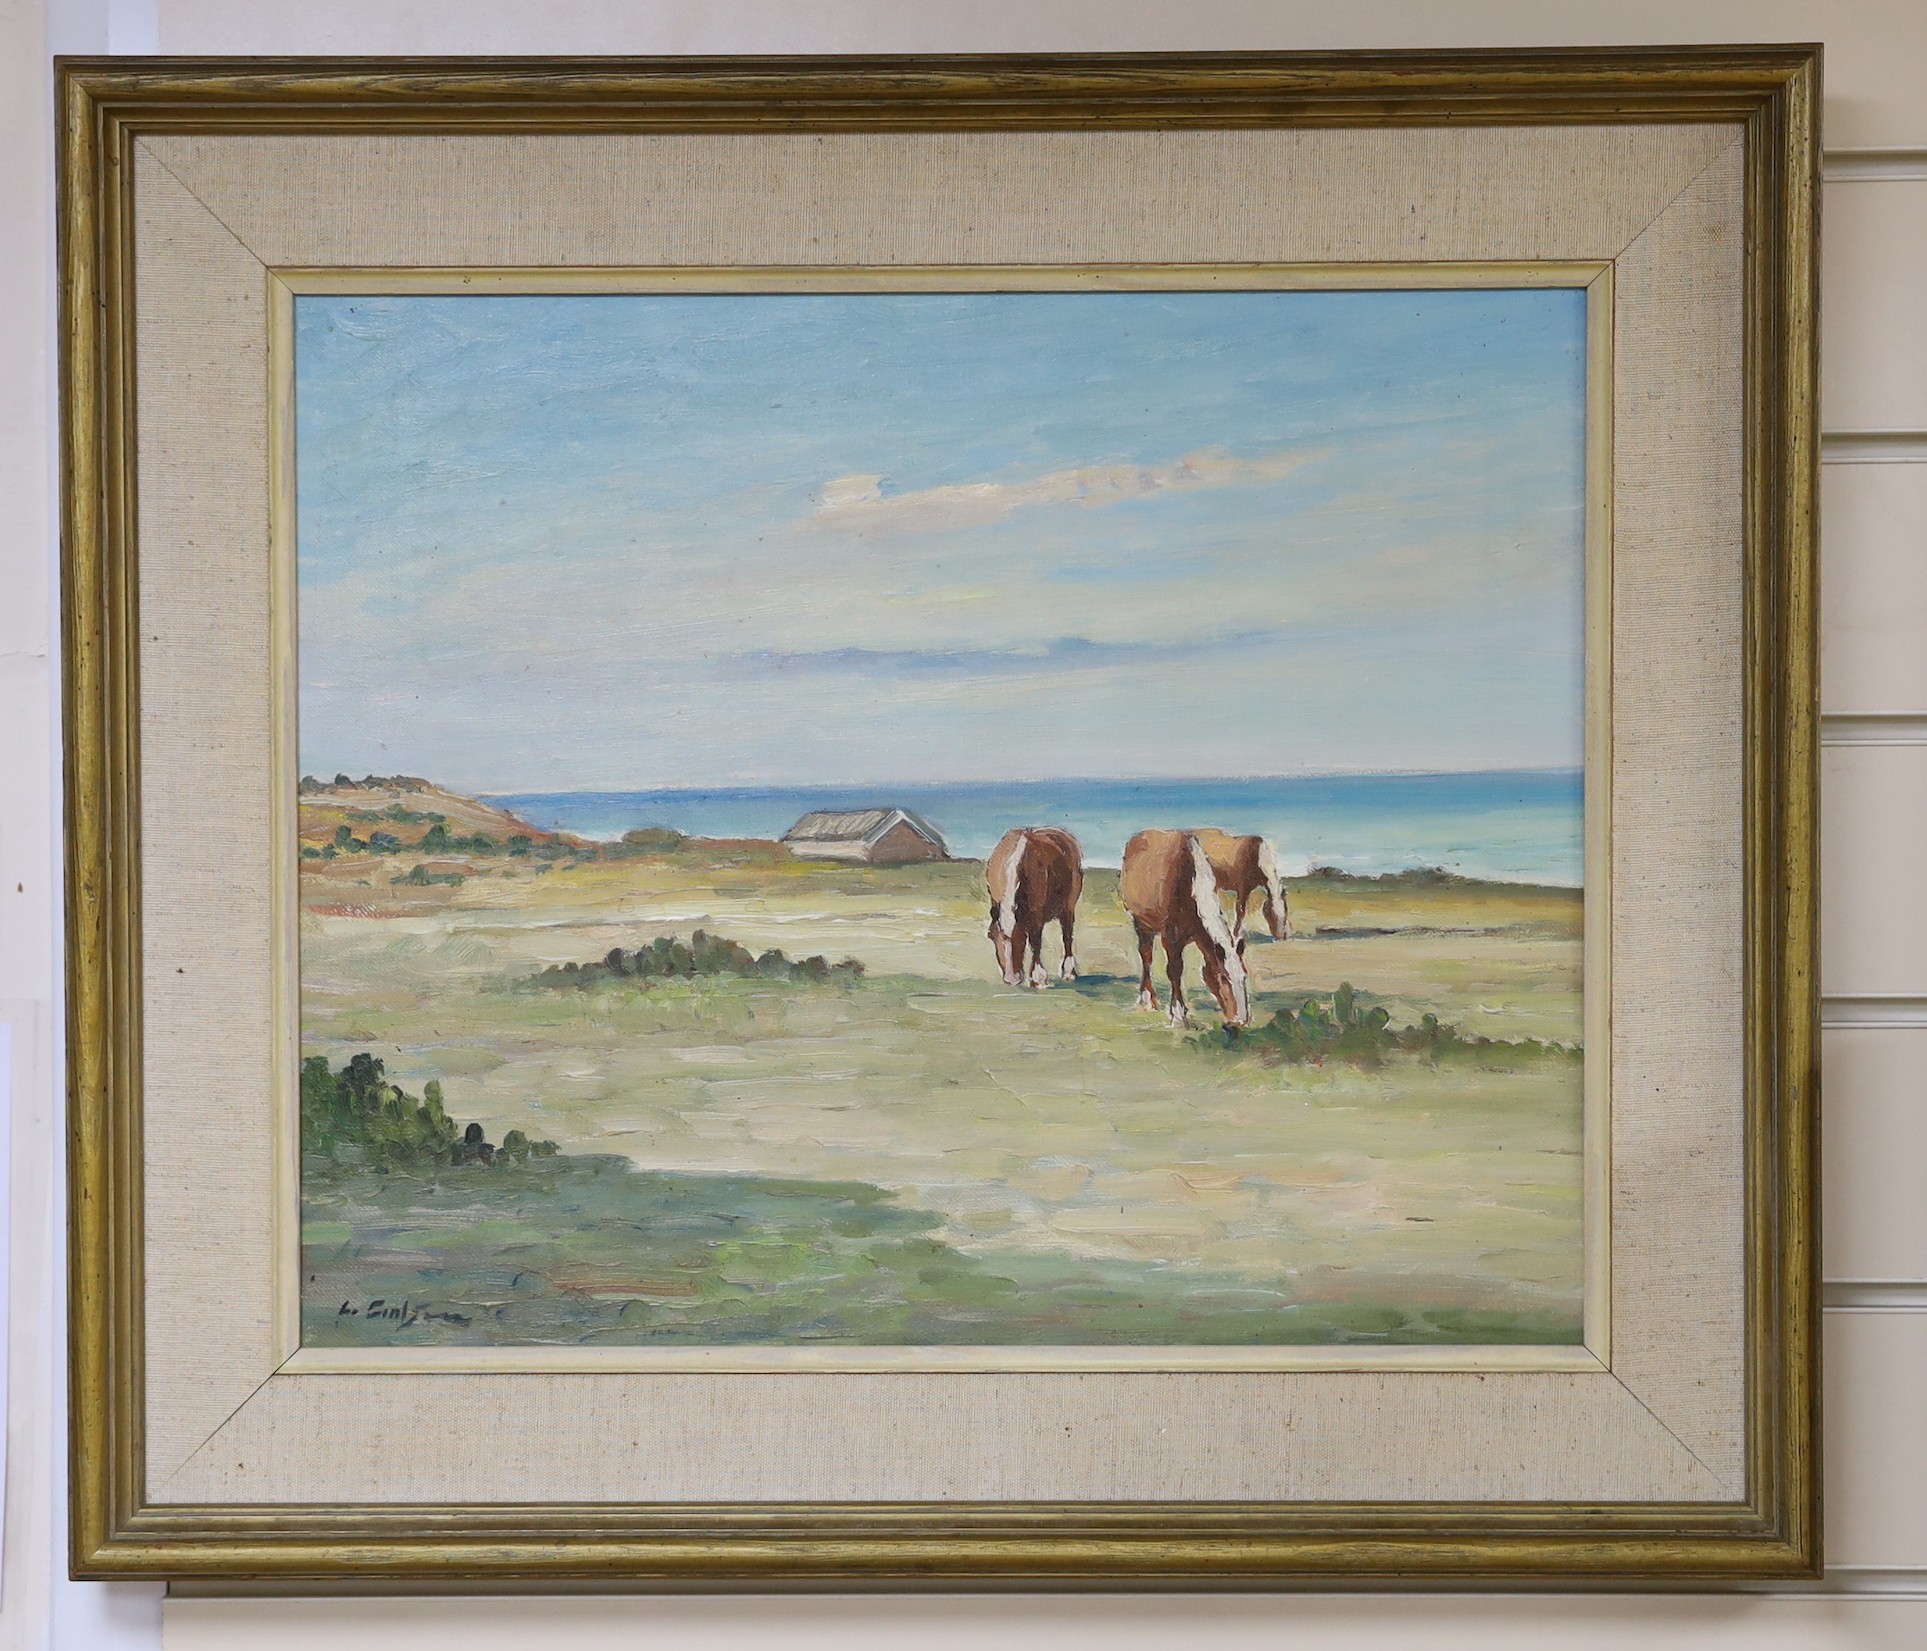 Lage Carlsson (1907-1983), oil on canvas, 'The island of Oland', indistinctly, 37 x 45cm